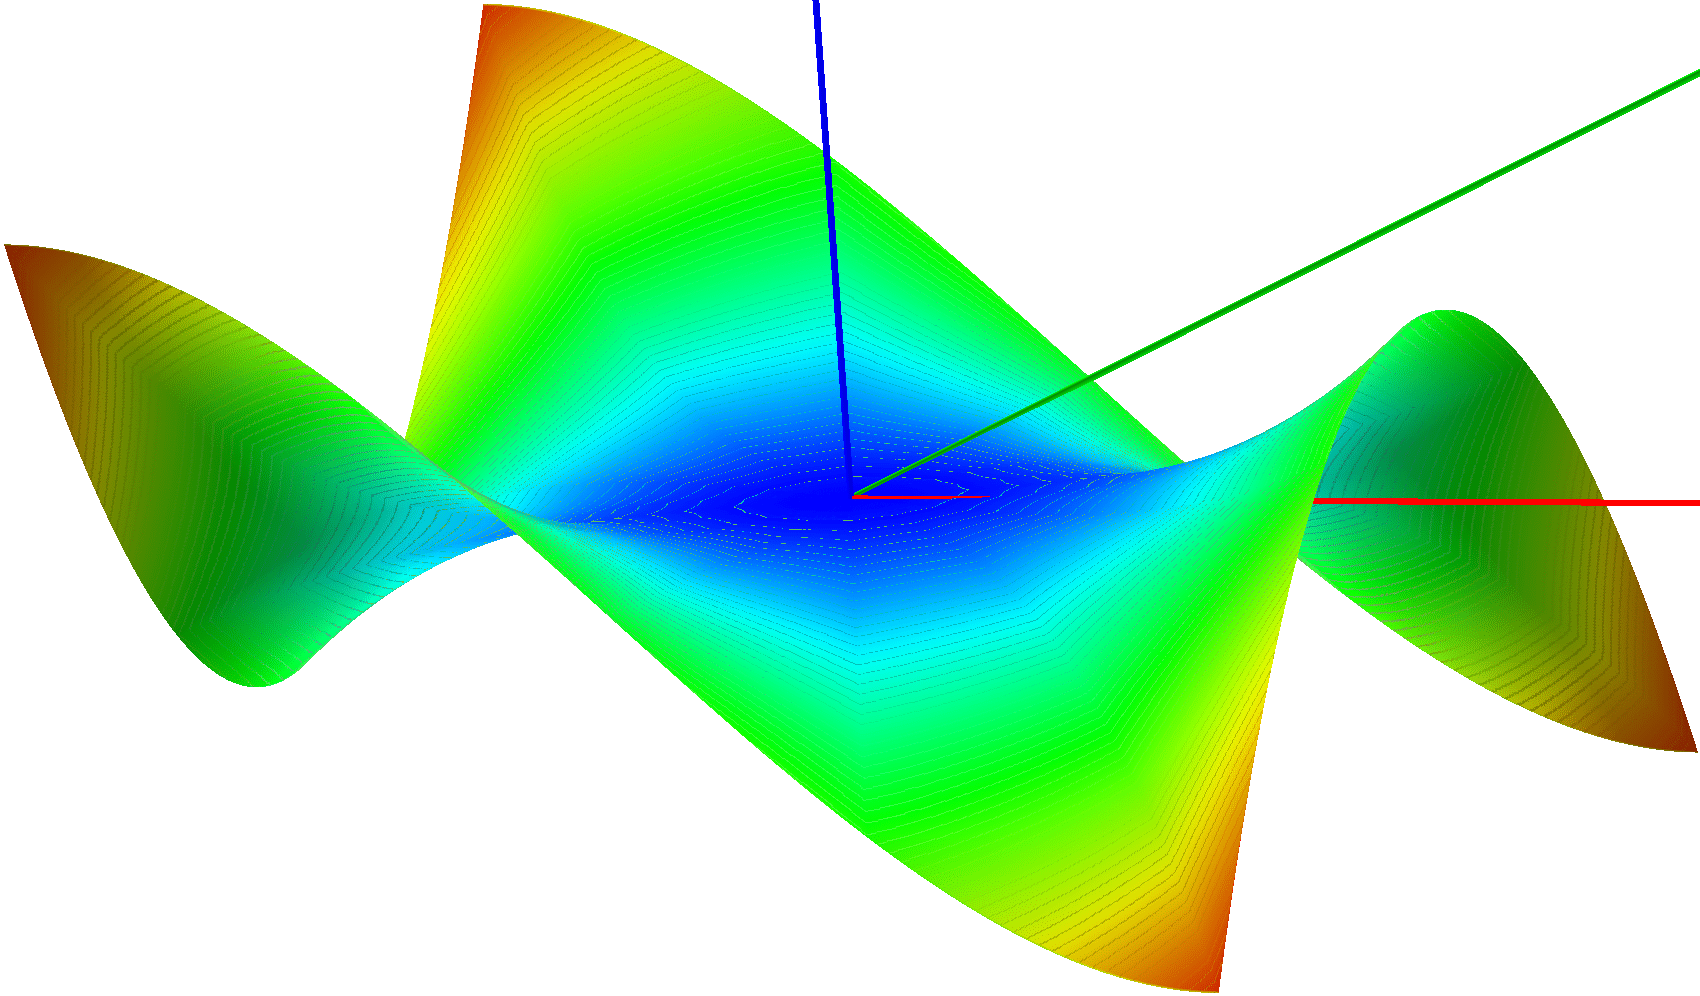 Screenshot of 3D optimization graph in MultiCharts